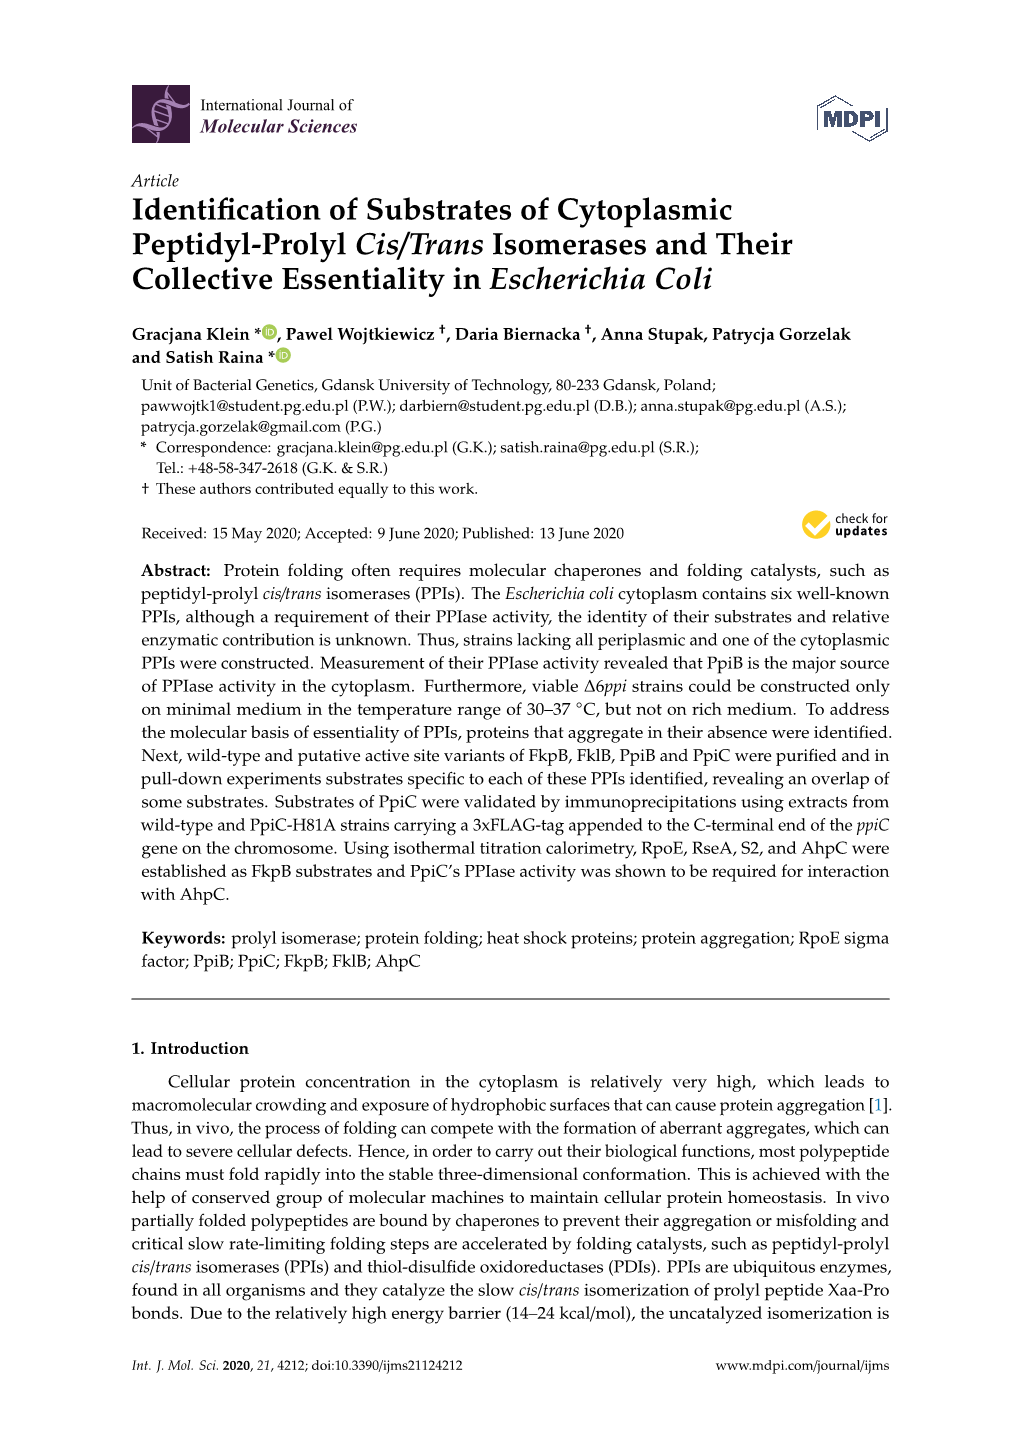 Identification of Substrates of Cytoplasmic Peptidyl-Prolyl Cis